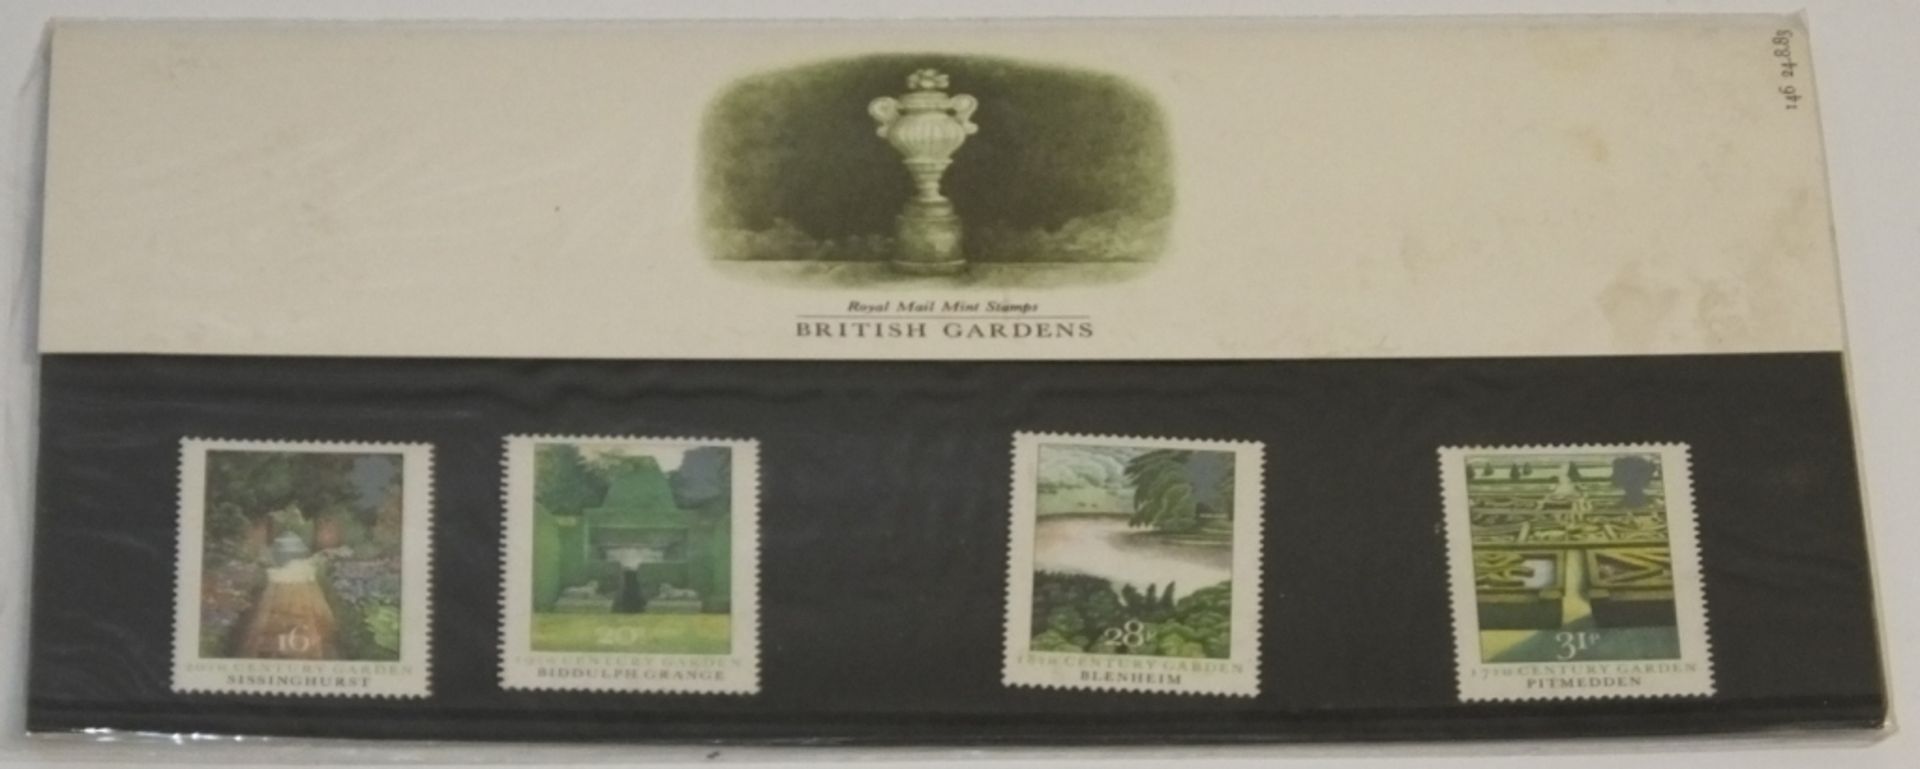 Stamp Card Sets - Jersey, Guernsey, British Gardens, Christmas, British Cars, British RIve - Image 15 of 22